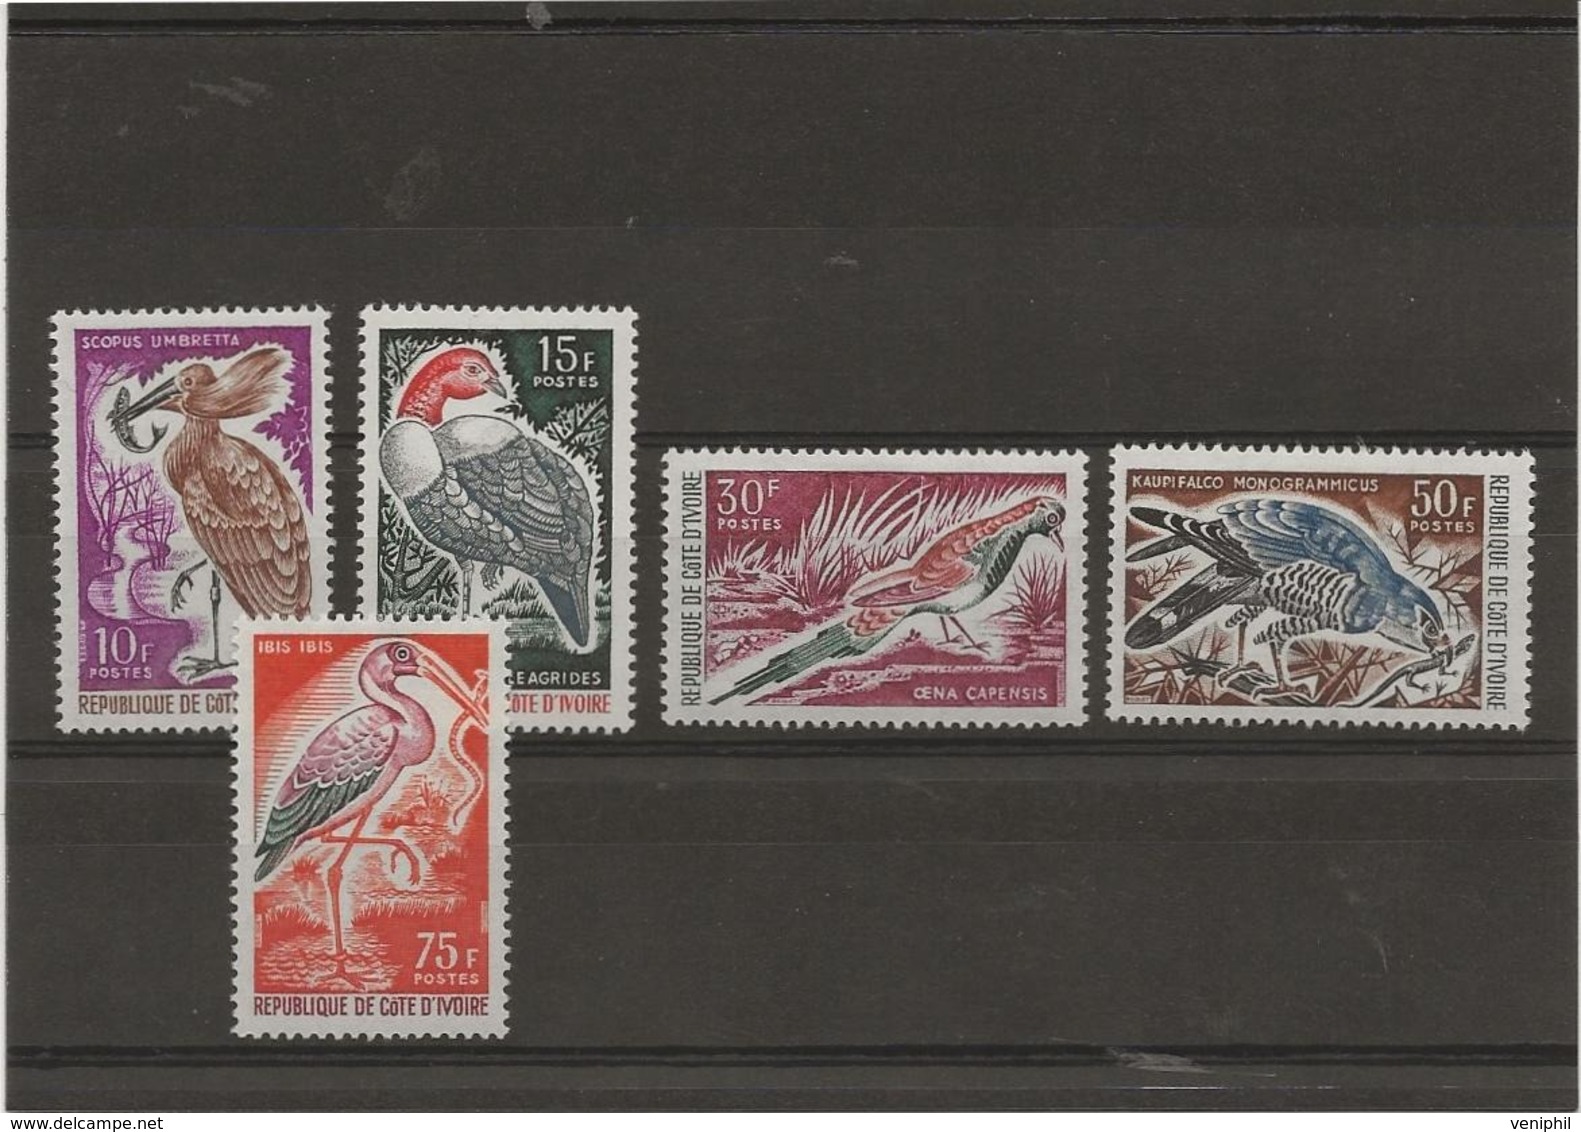 COTE D'IVOIRE N° 238 A 242 -NEUF X -SERIE OISEAUX - ANNEE 1965 - Unused Stamps